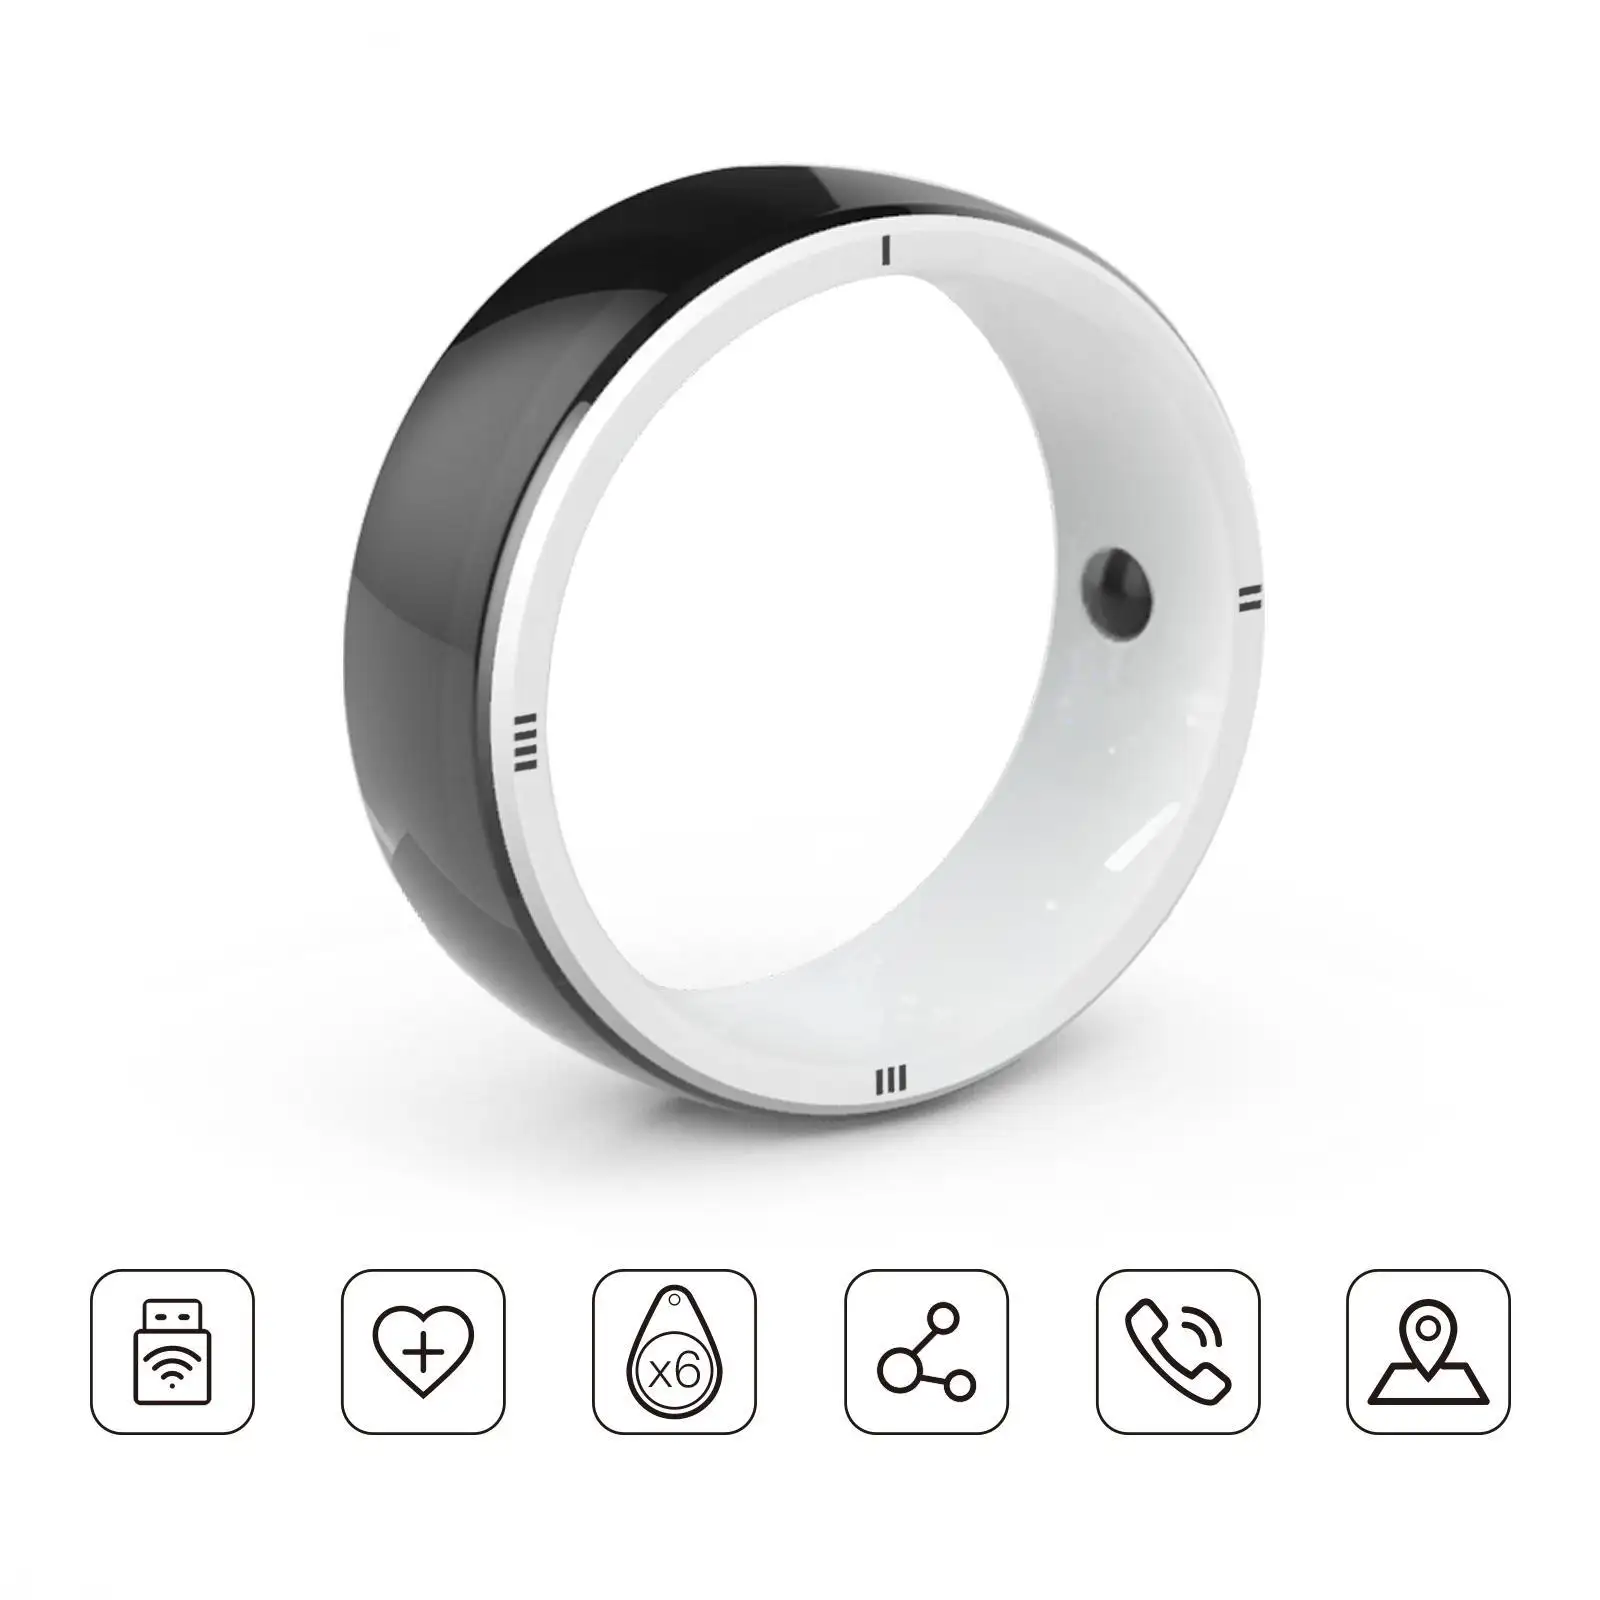 Jakcom R5 Smart Ring Nieuw Smart Ring Product Als Botgeleidende Bril Barcode Printer Label Industriële Ribon 17Inch Tablet Hd